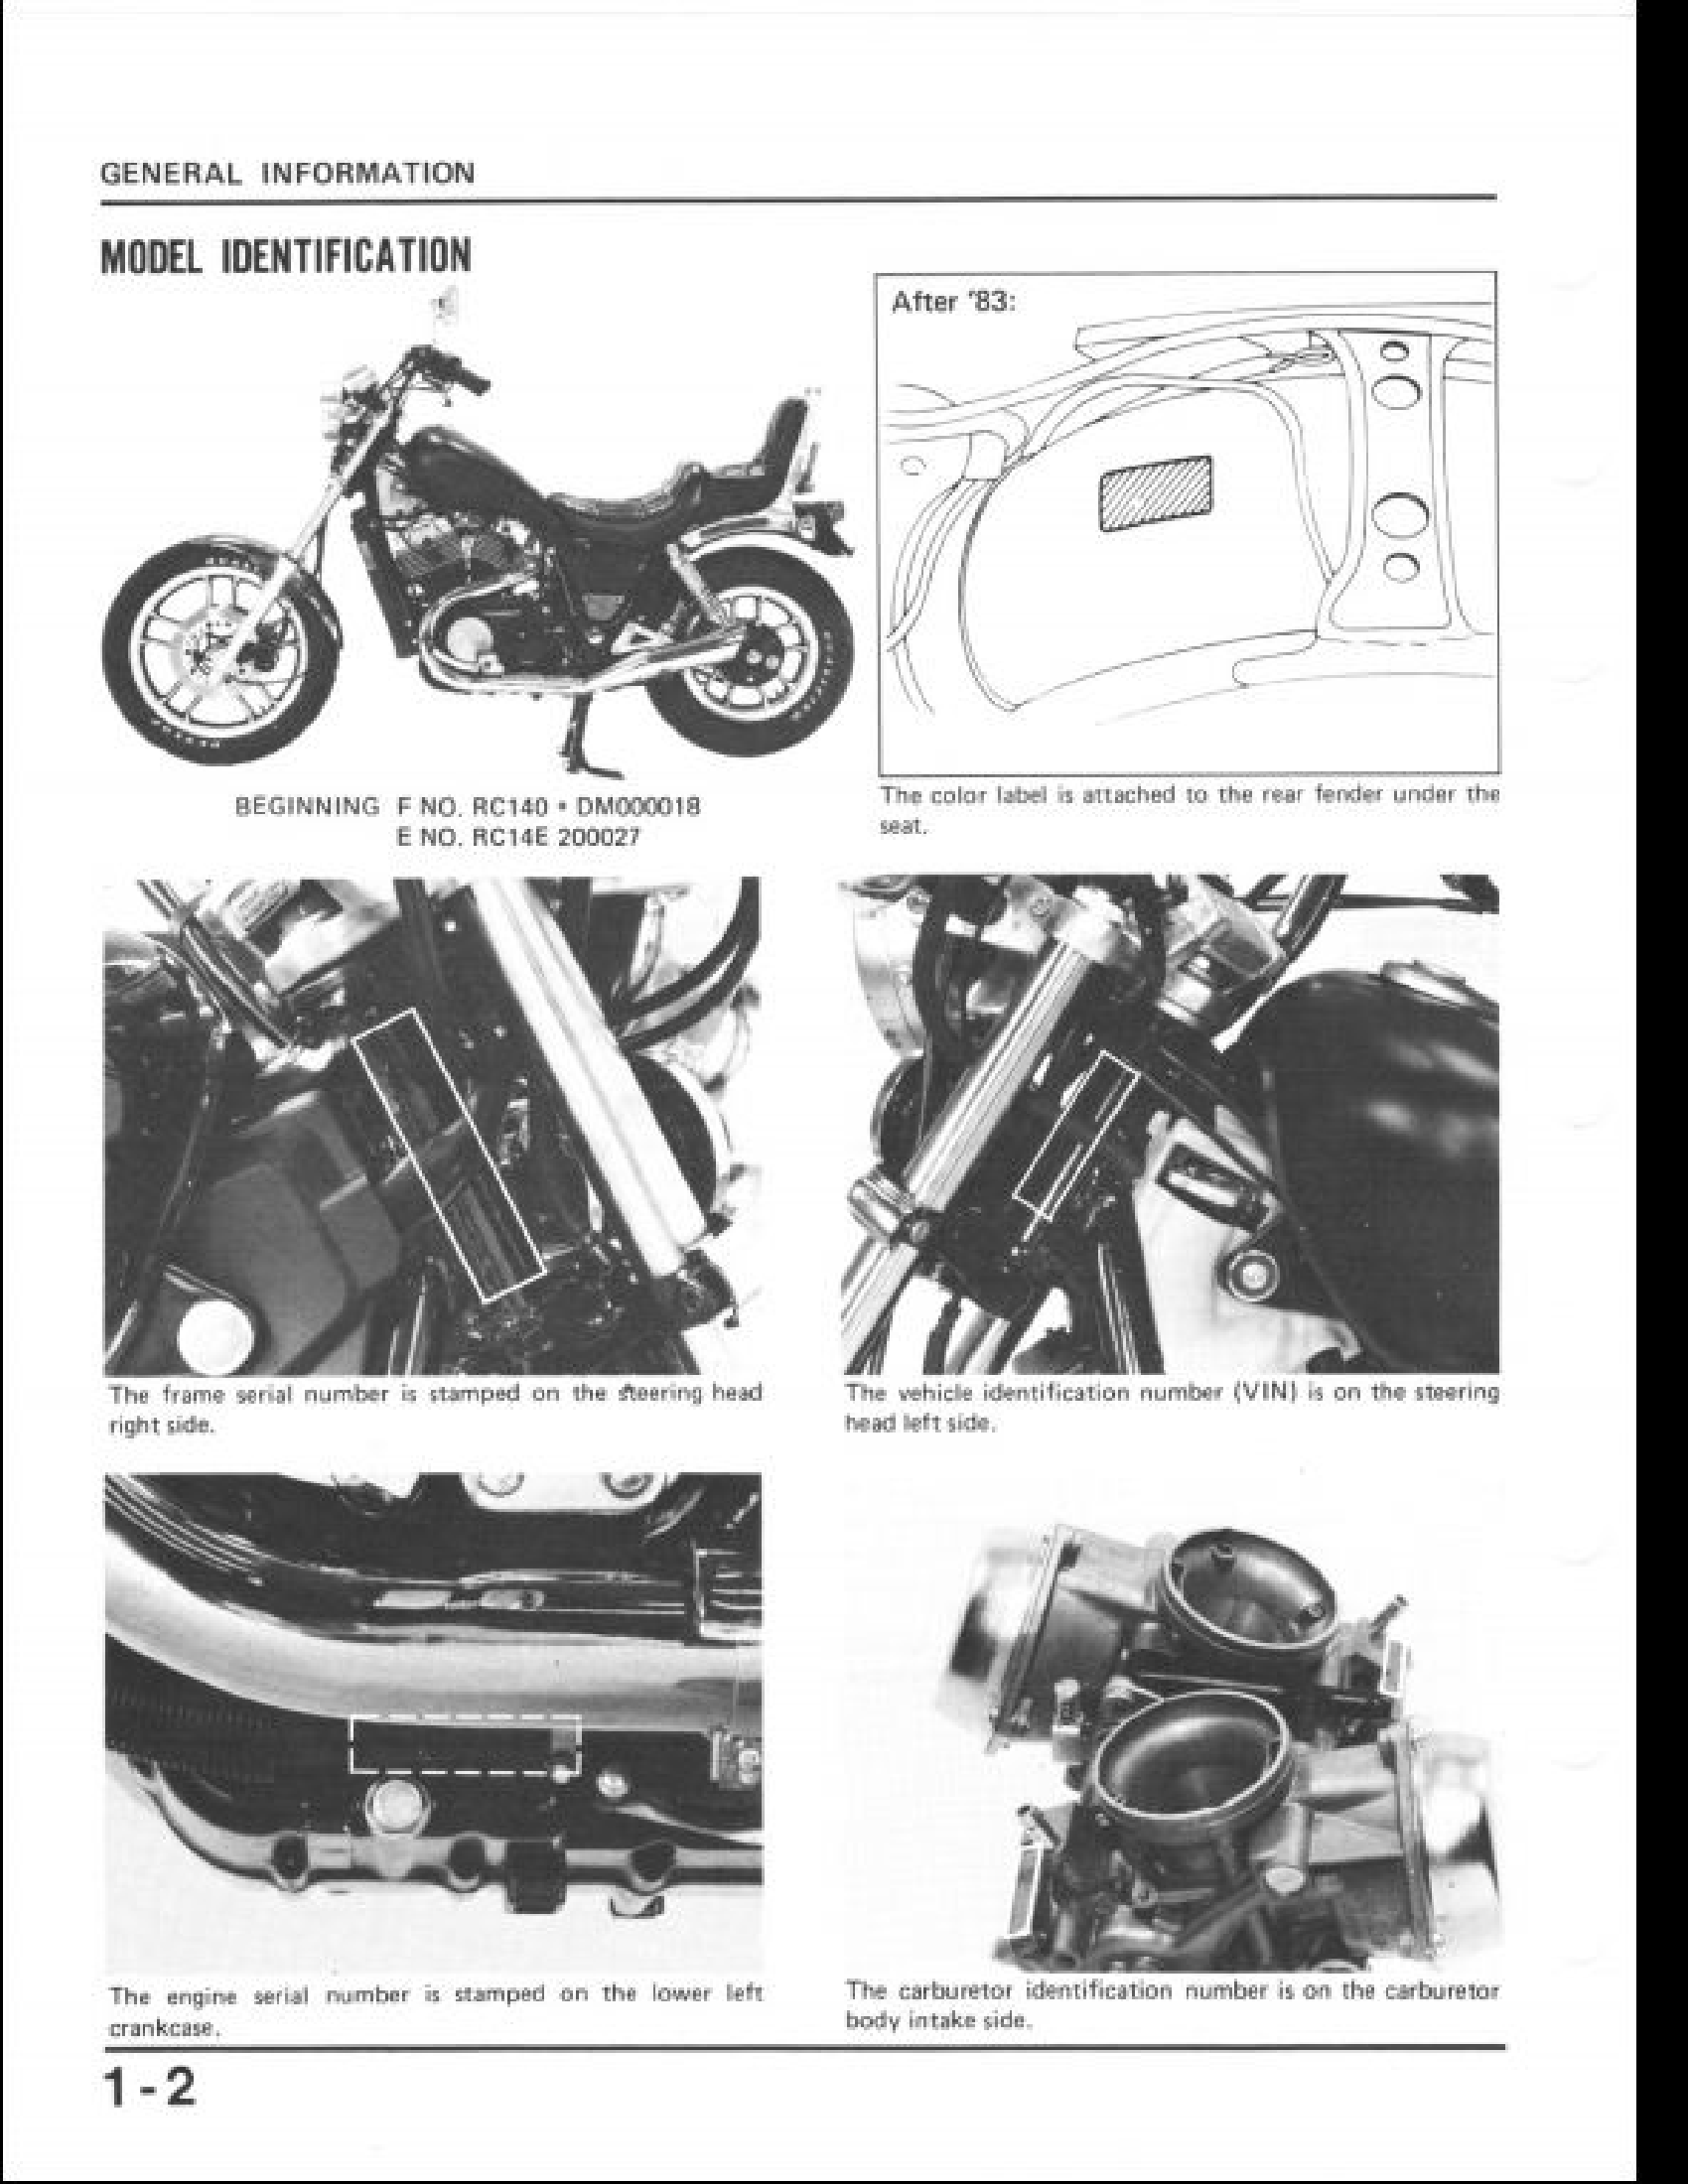 Honda VT750C Motocycle manual